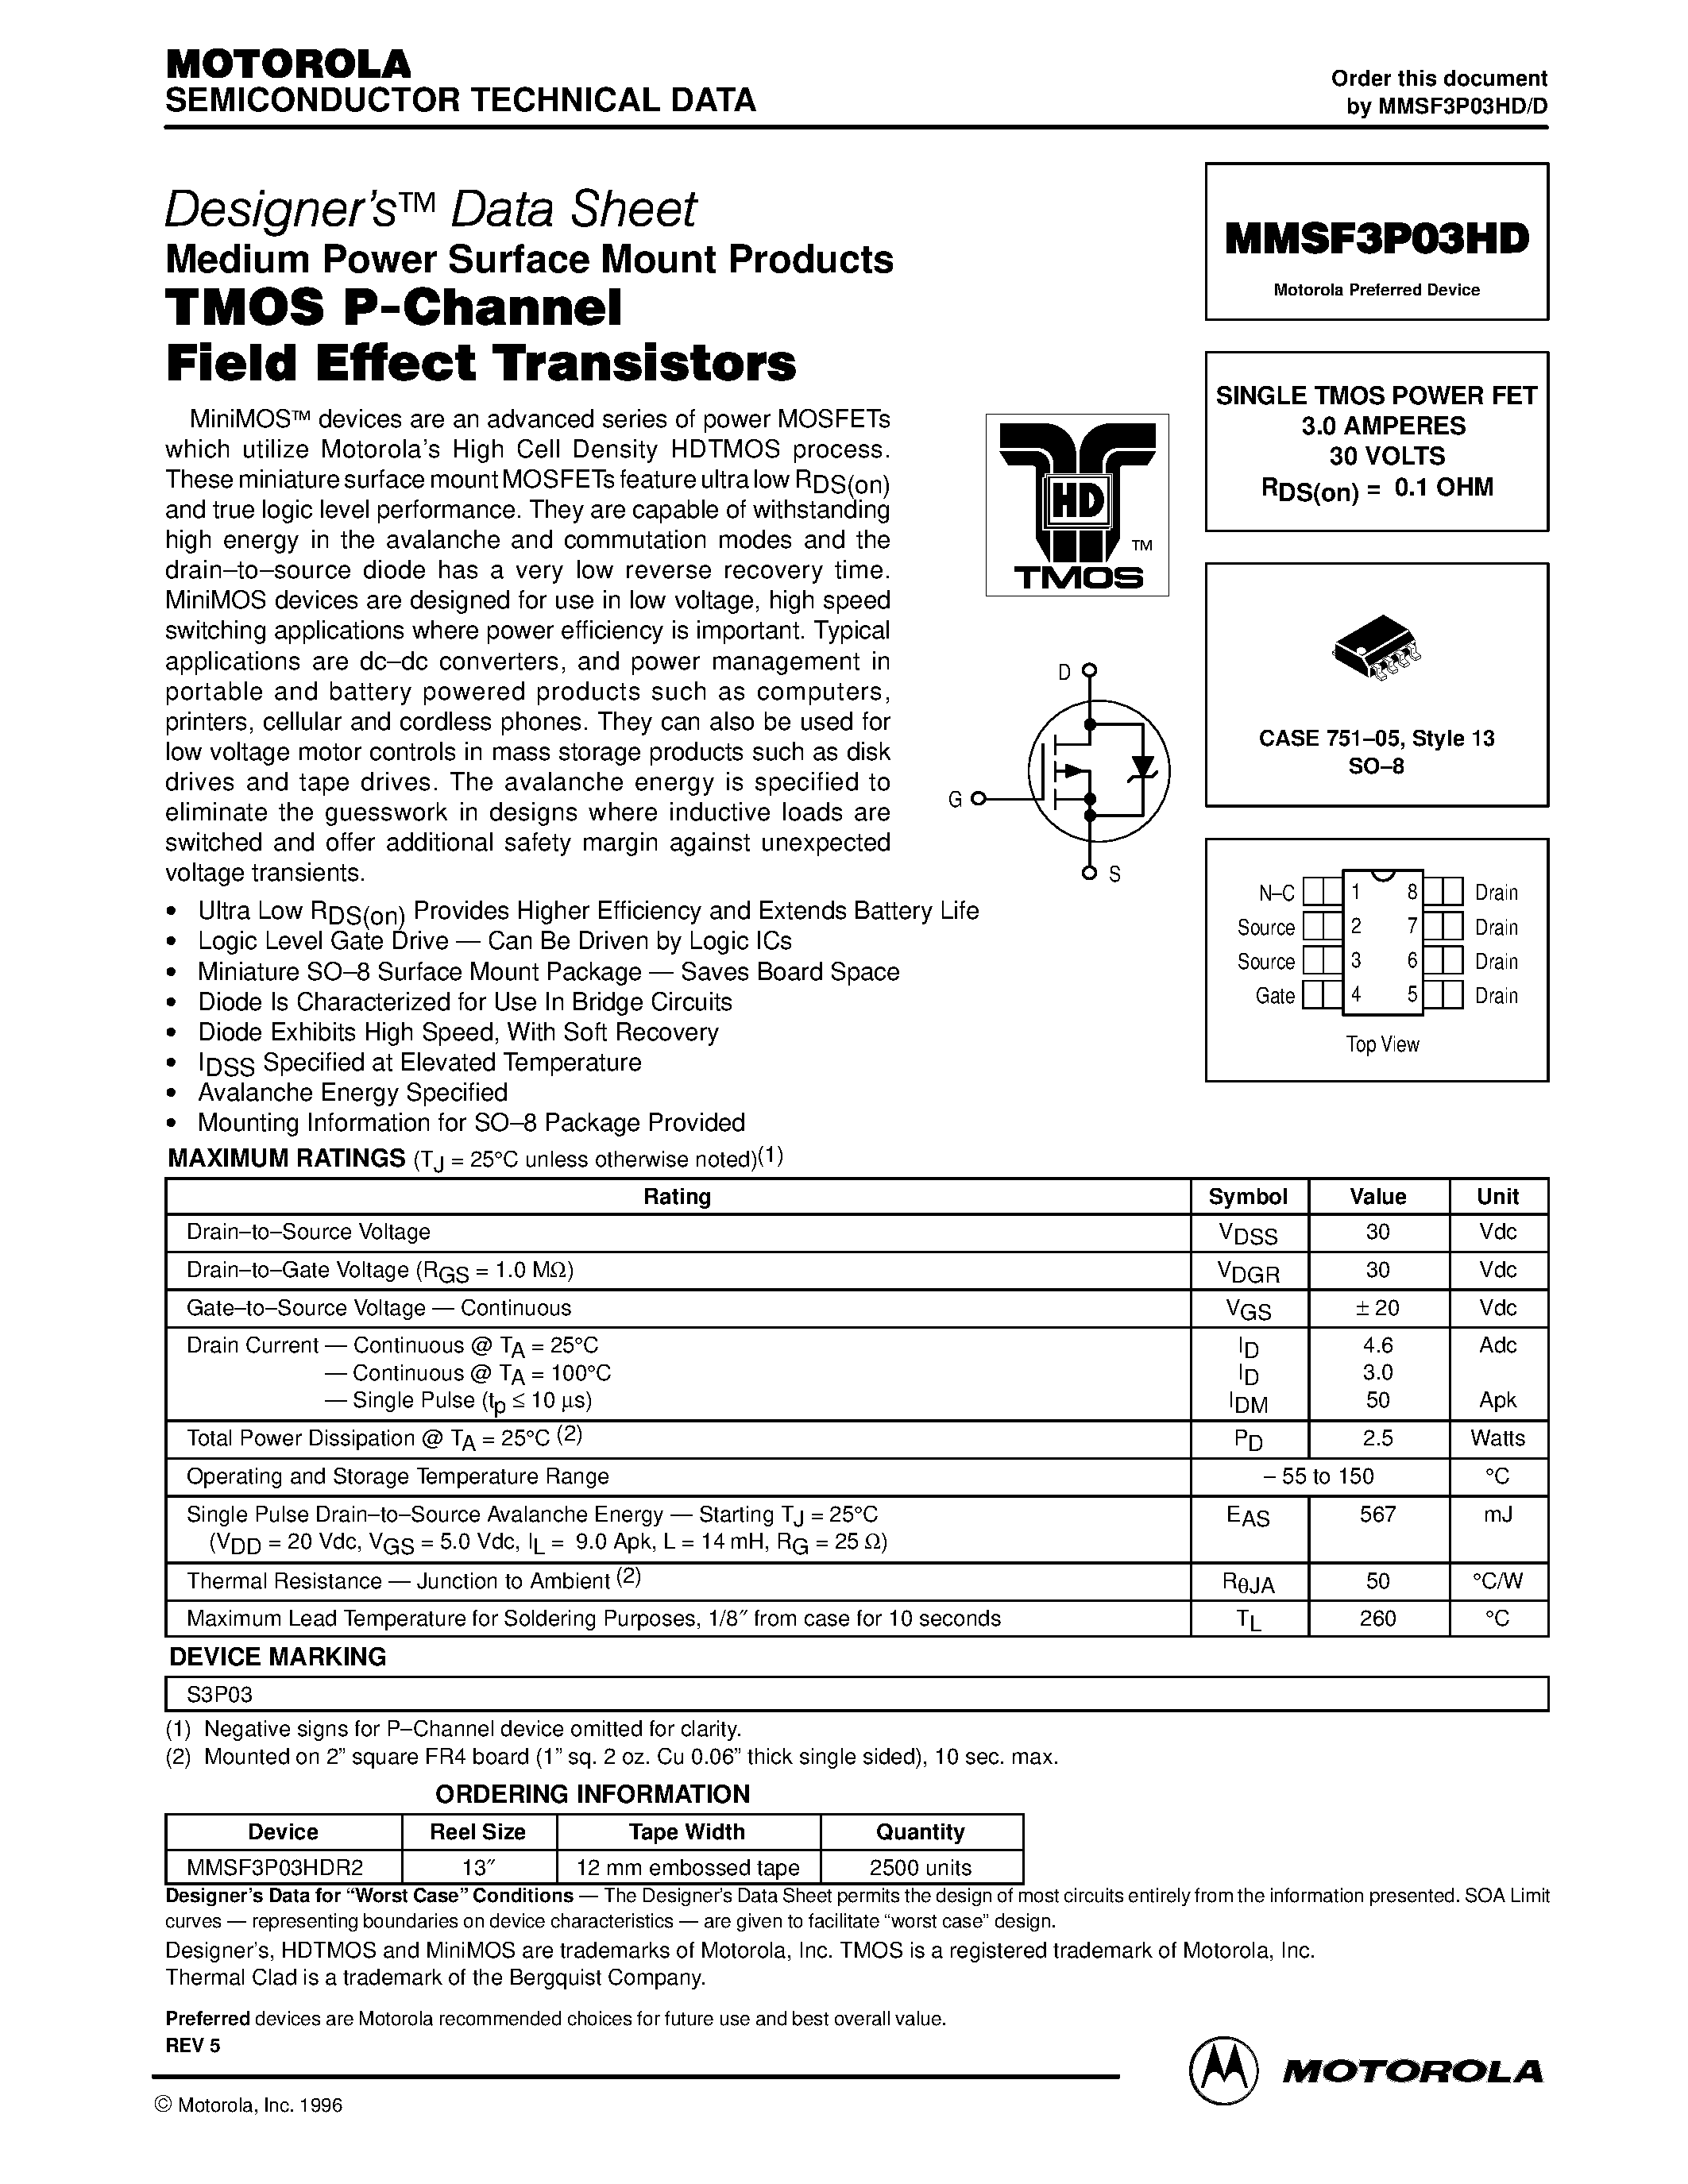 Даташит MMSF3P03HD - SINGLE TMOS POWER FET 3.0 AMPERES 30 VOLTS страница 1